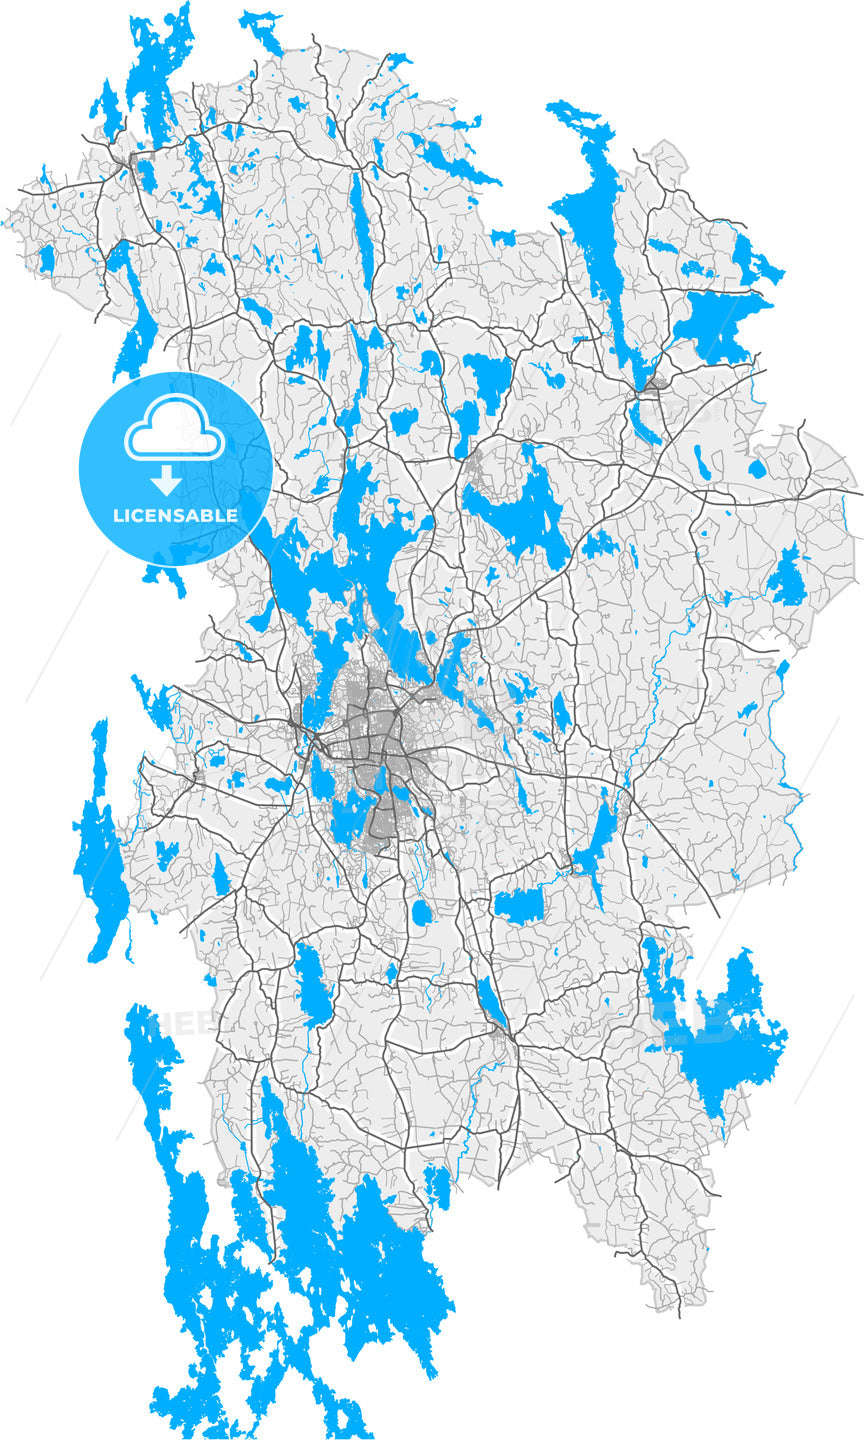 Växjö, Sweden, high quality vector map